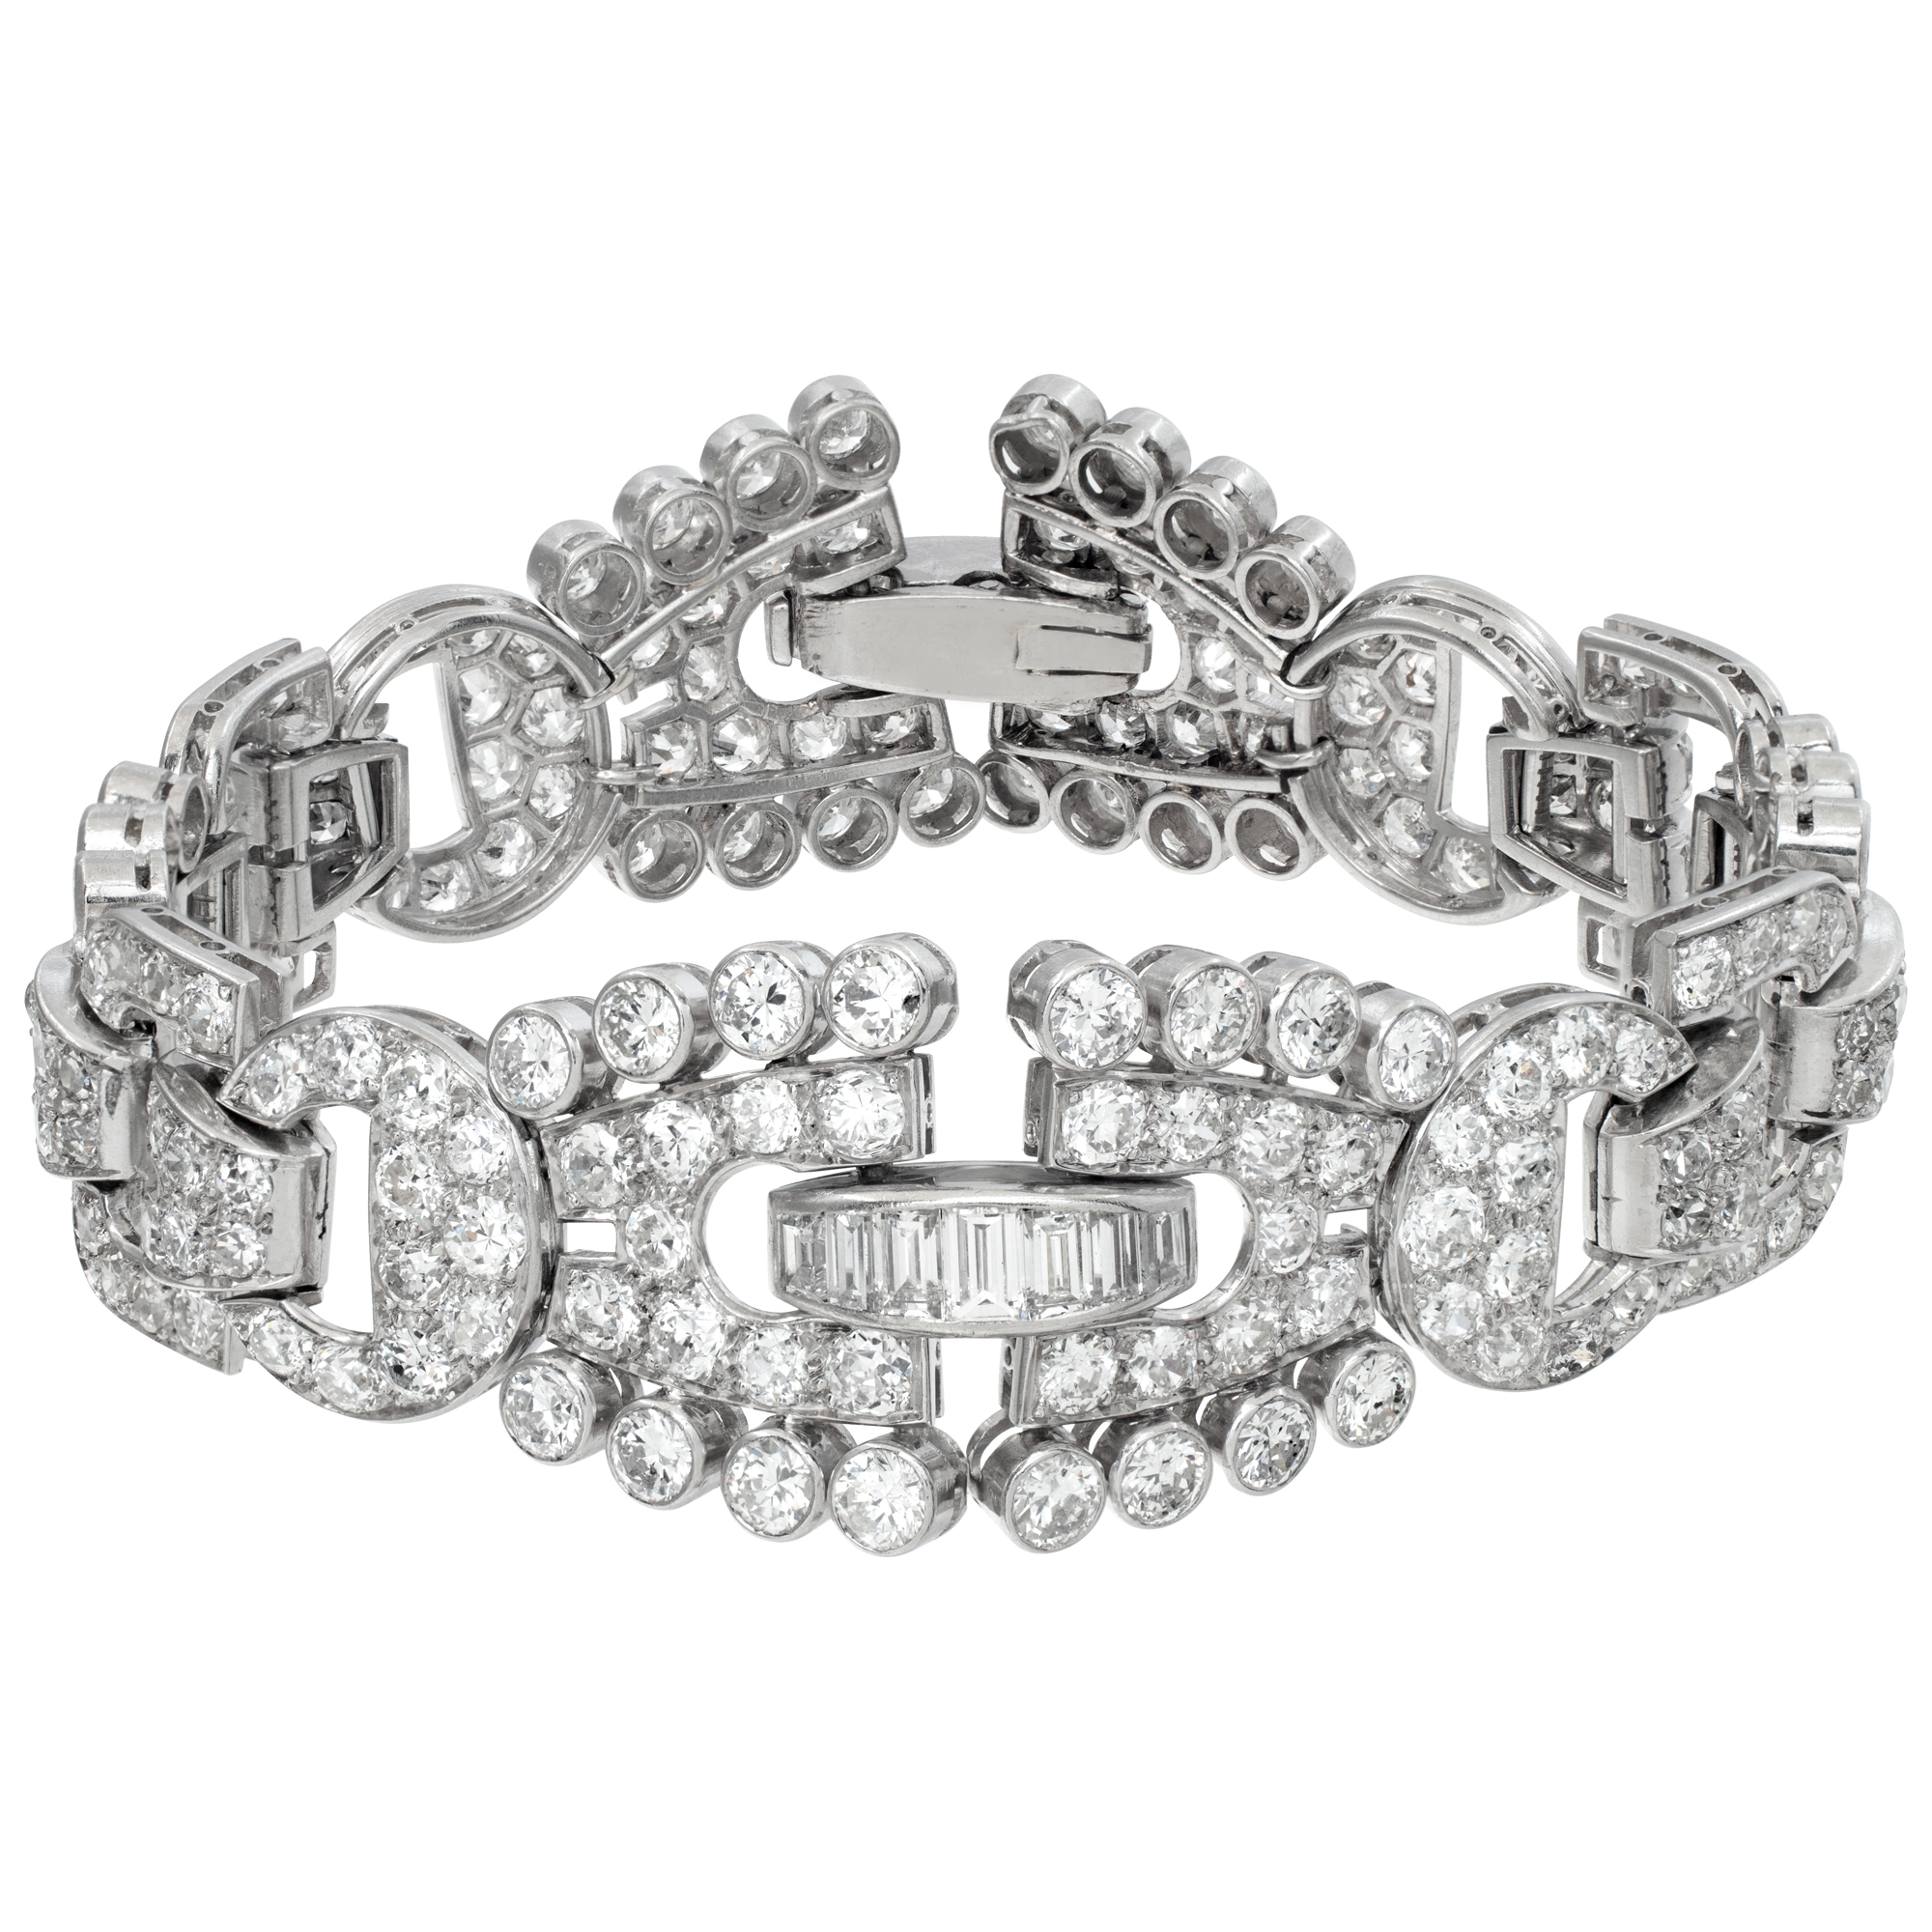 Art deco round brilliant and baguettes cut diamonds bracelet set in Platinum. Over 12 carats Round & baguettes cut diamonds image 1